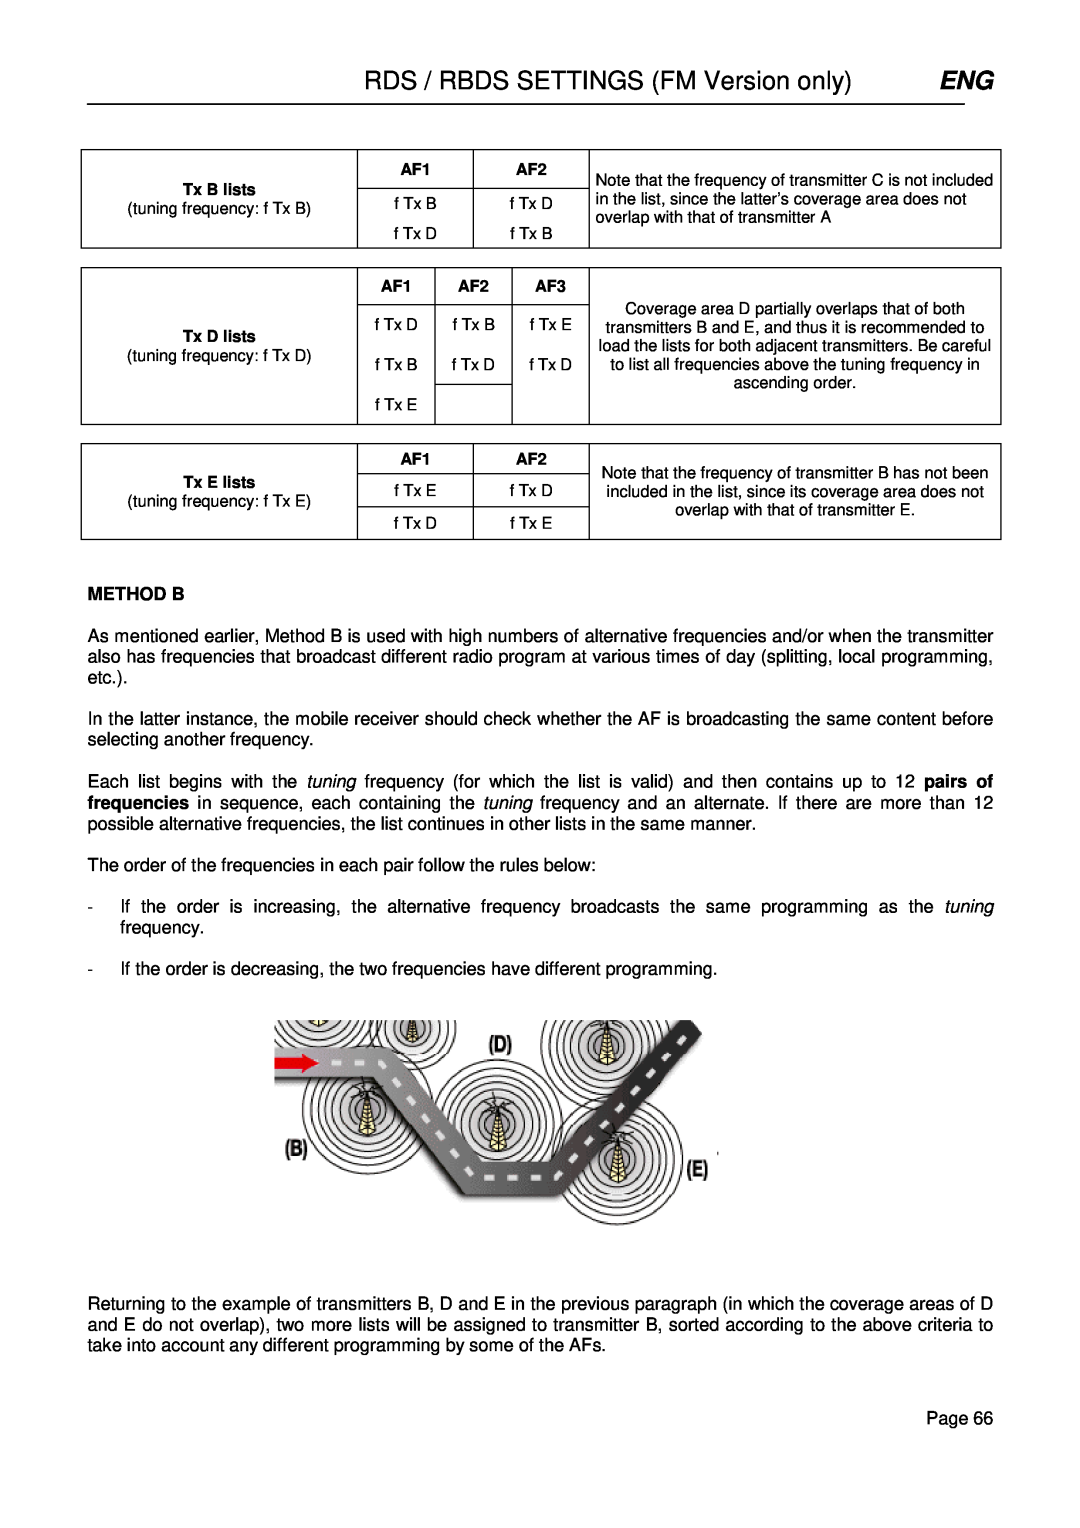 Falcon 15 manual RDS / RBDS SETTINGS FM Version only, Method B 